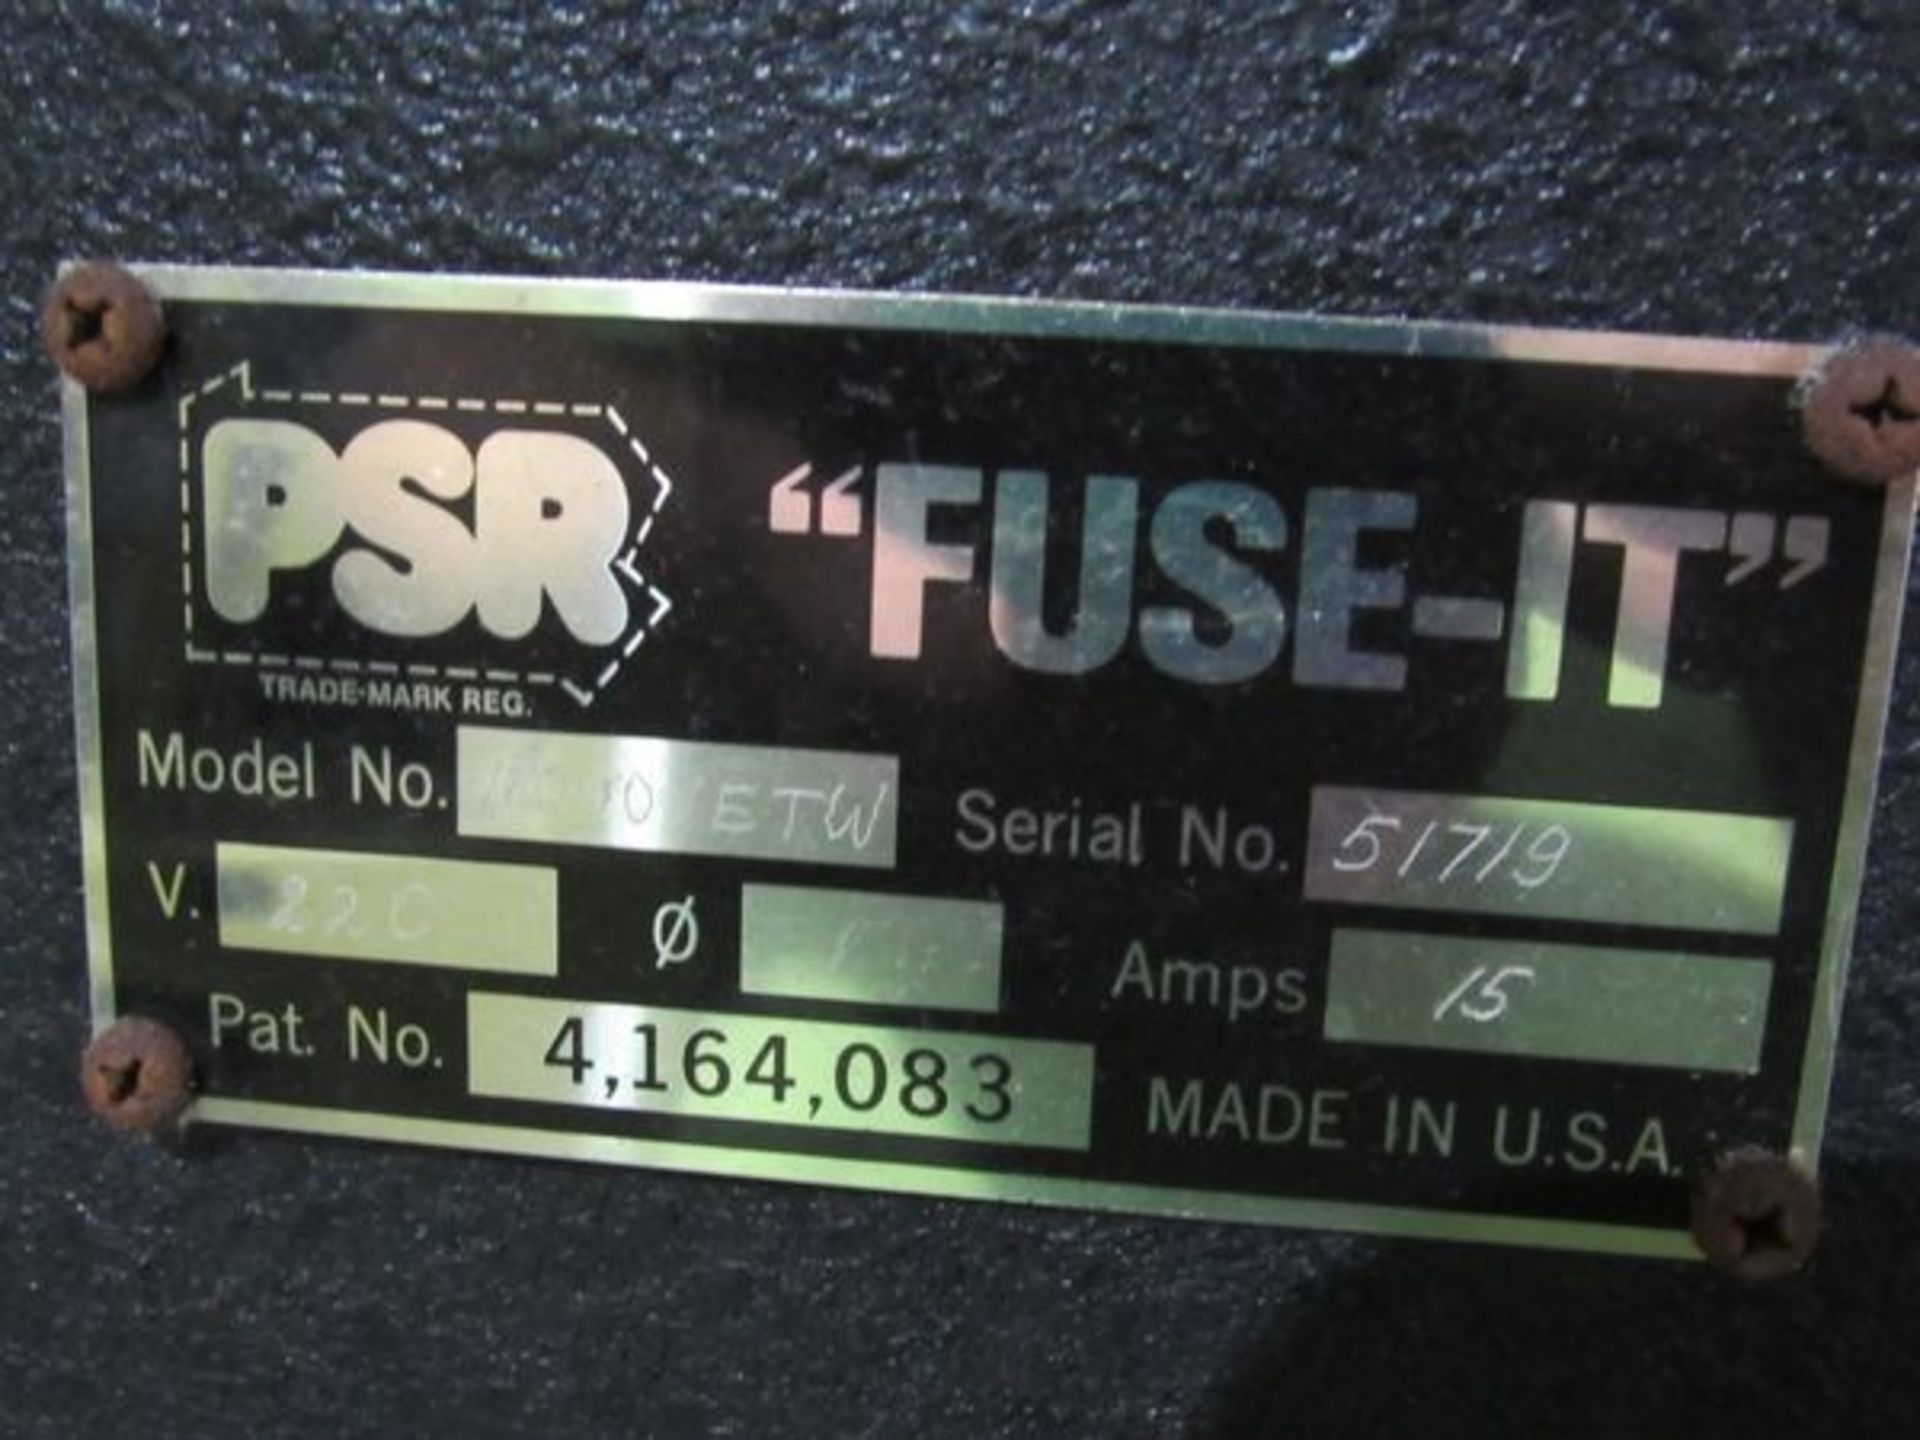 PSR Fuse-It- - Image 6 of 6